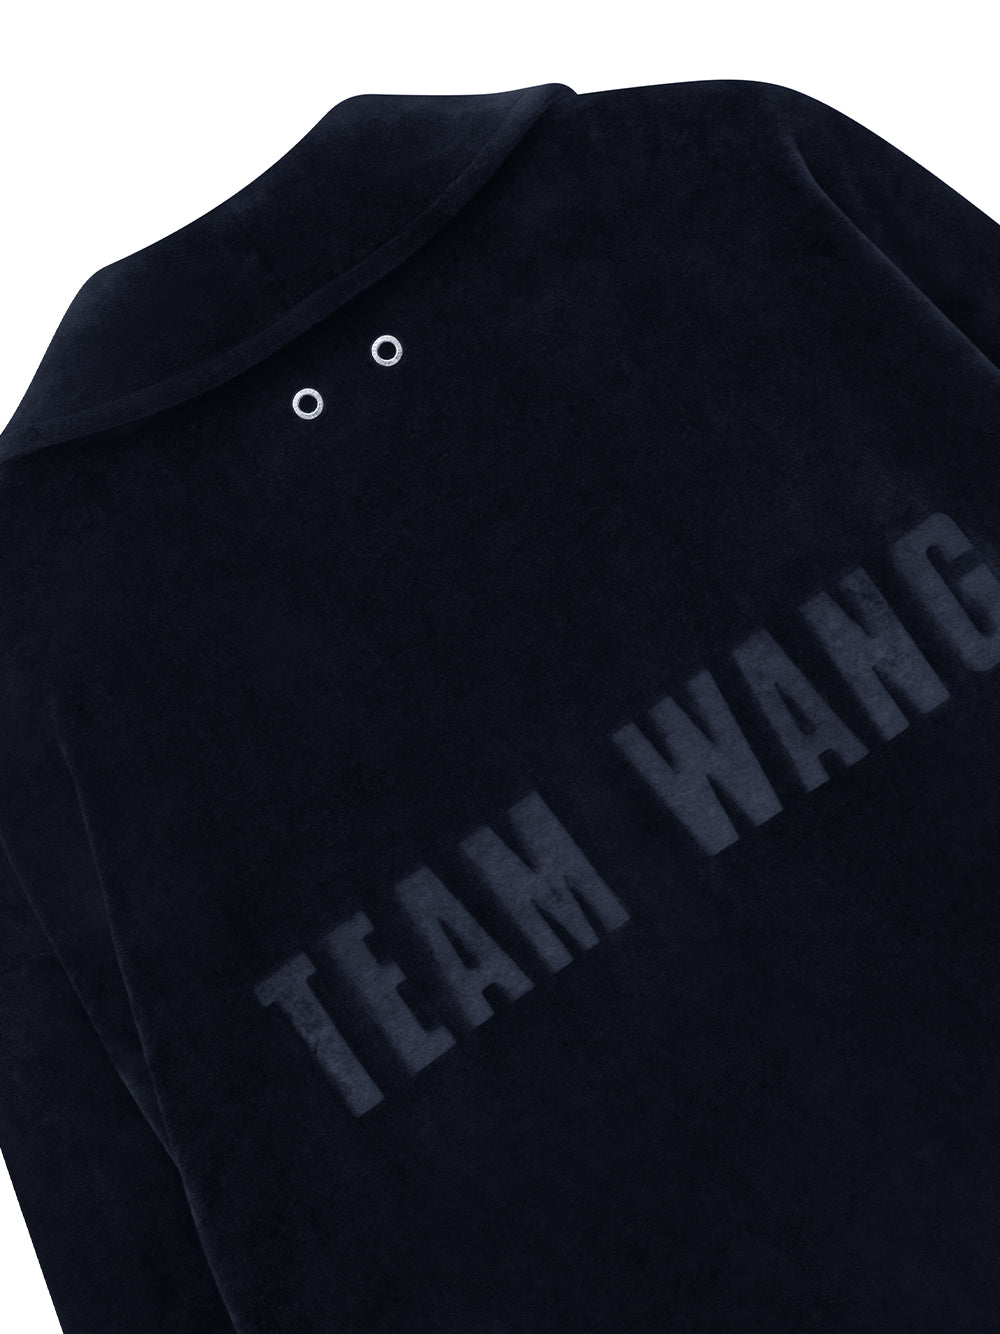 Team-Wang-Design-THE-ORIGINAL-1-Logo-Debossed-Bathrobe-Black-8